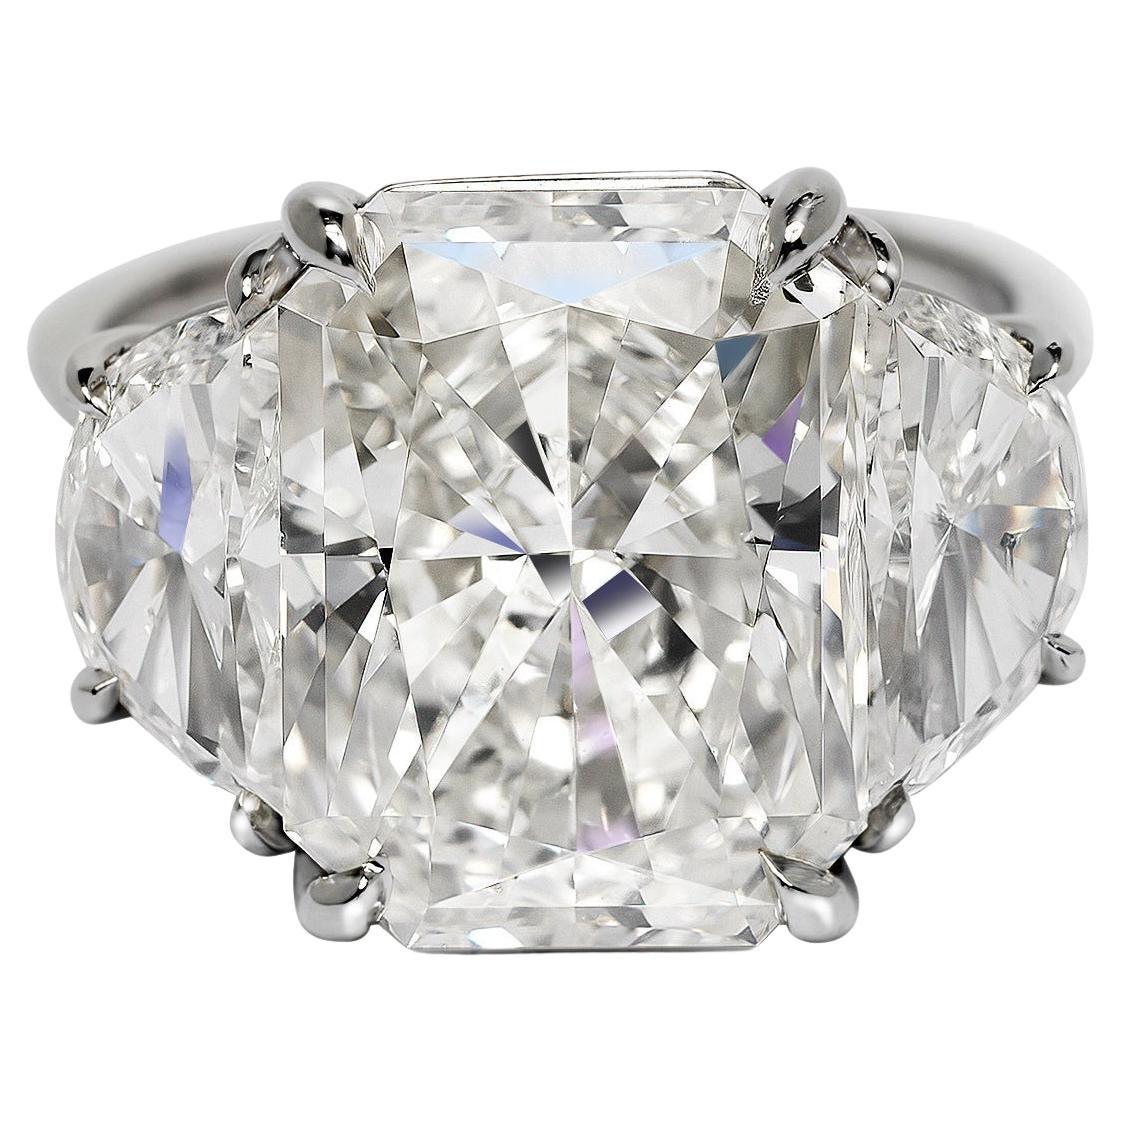 11 Carat Radiant Cut Diamond Engagement Ring GIA Certified K SI1